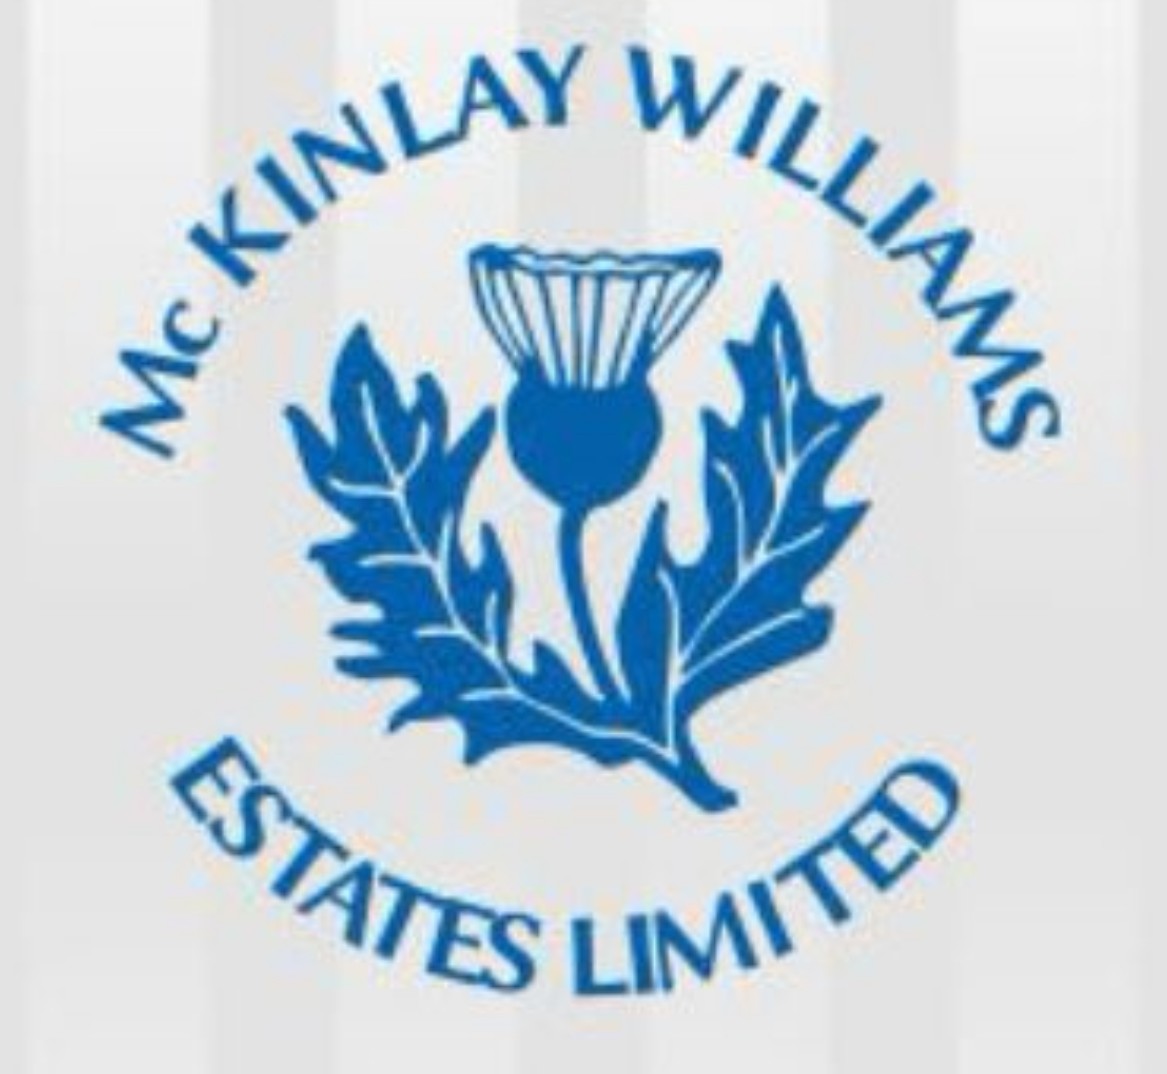 McKinley Williams Estate Ltd